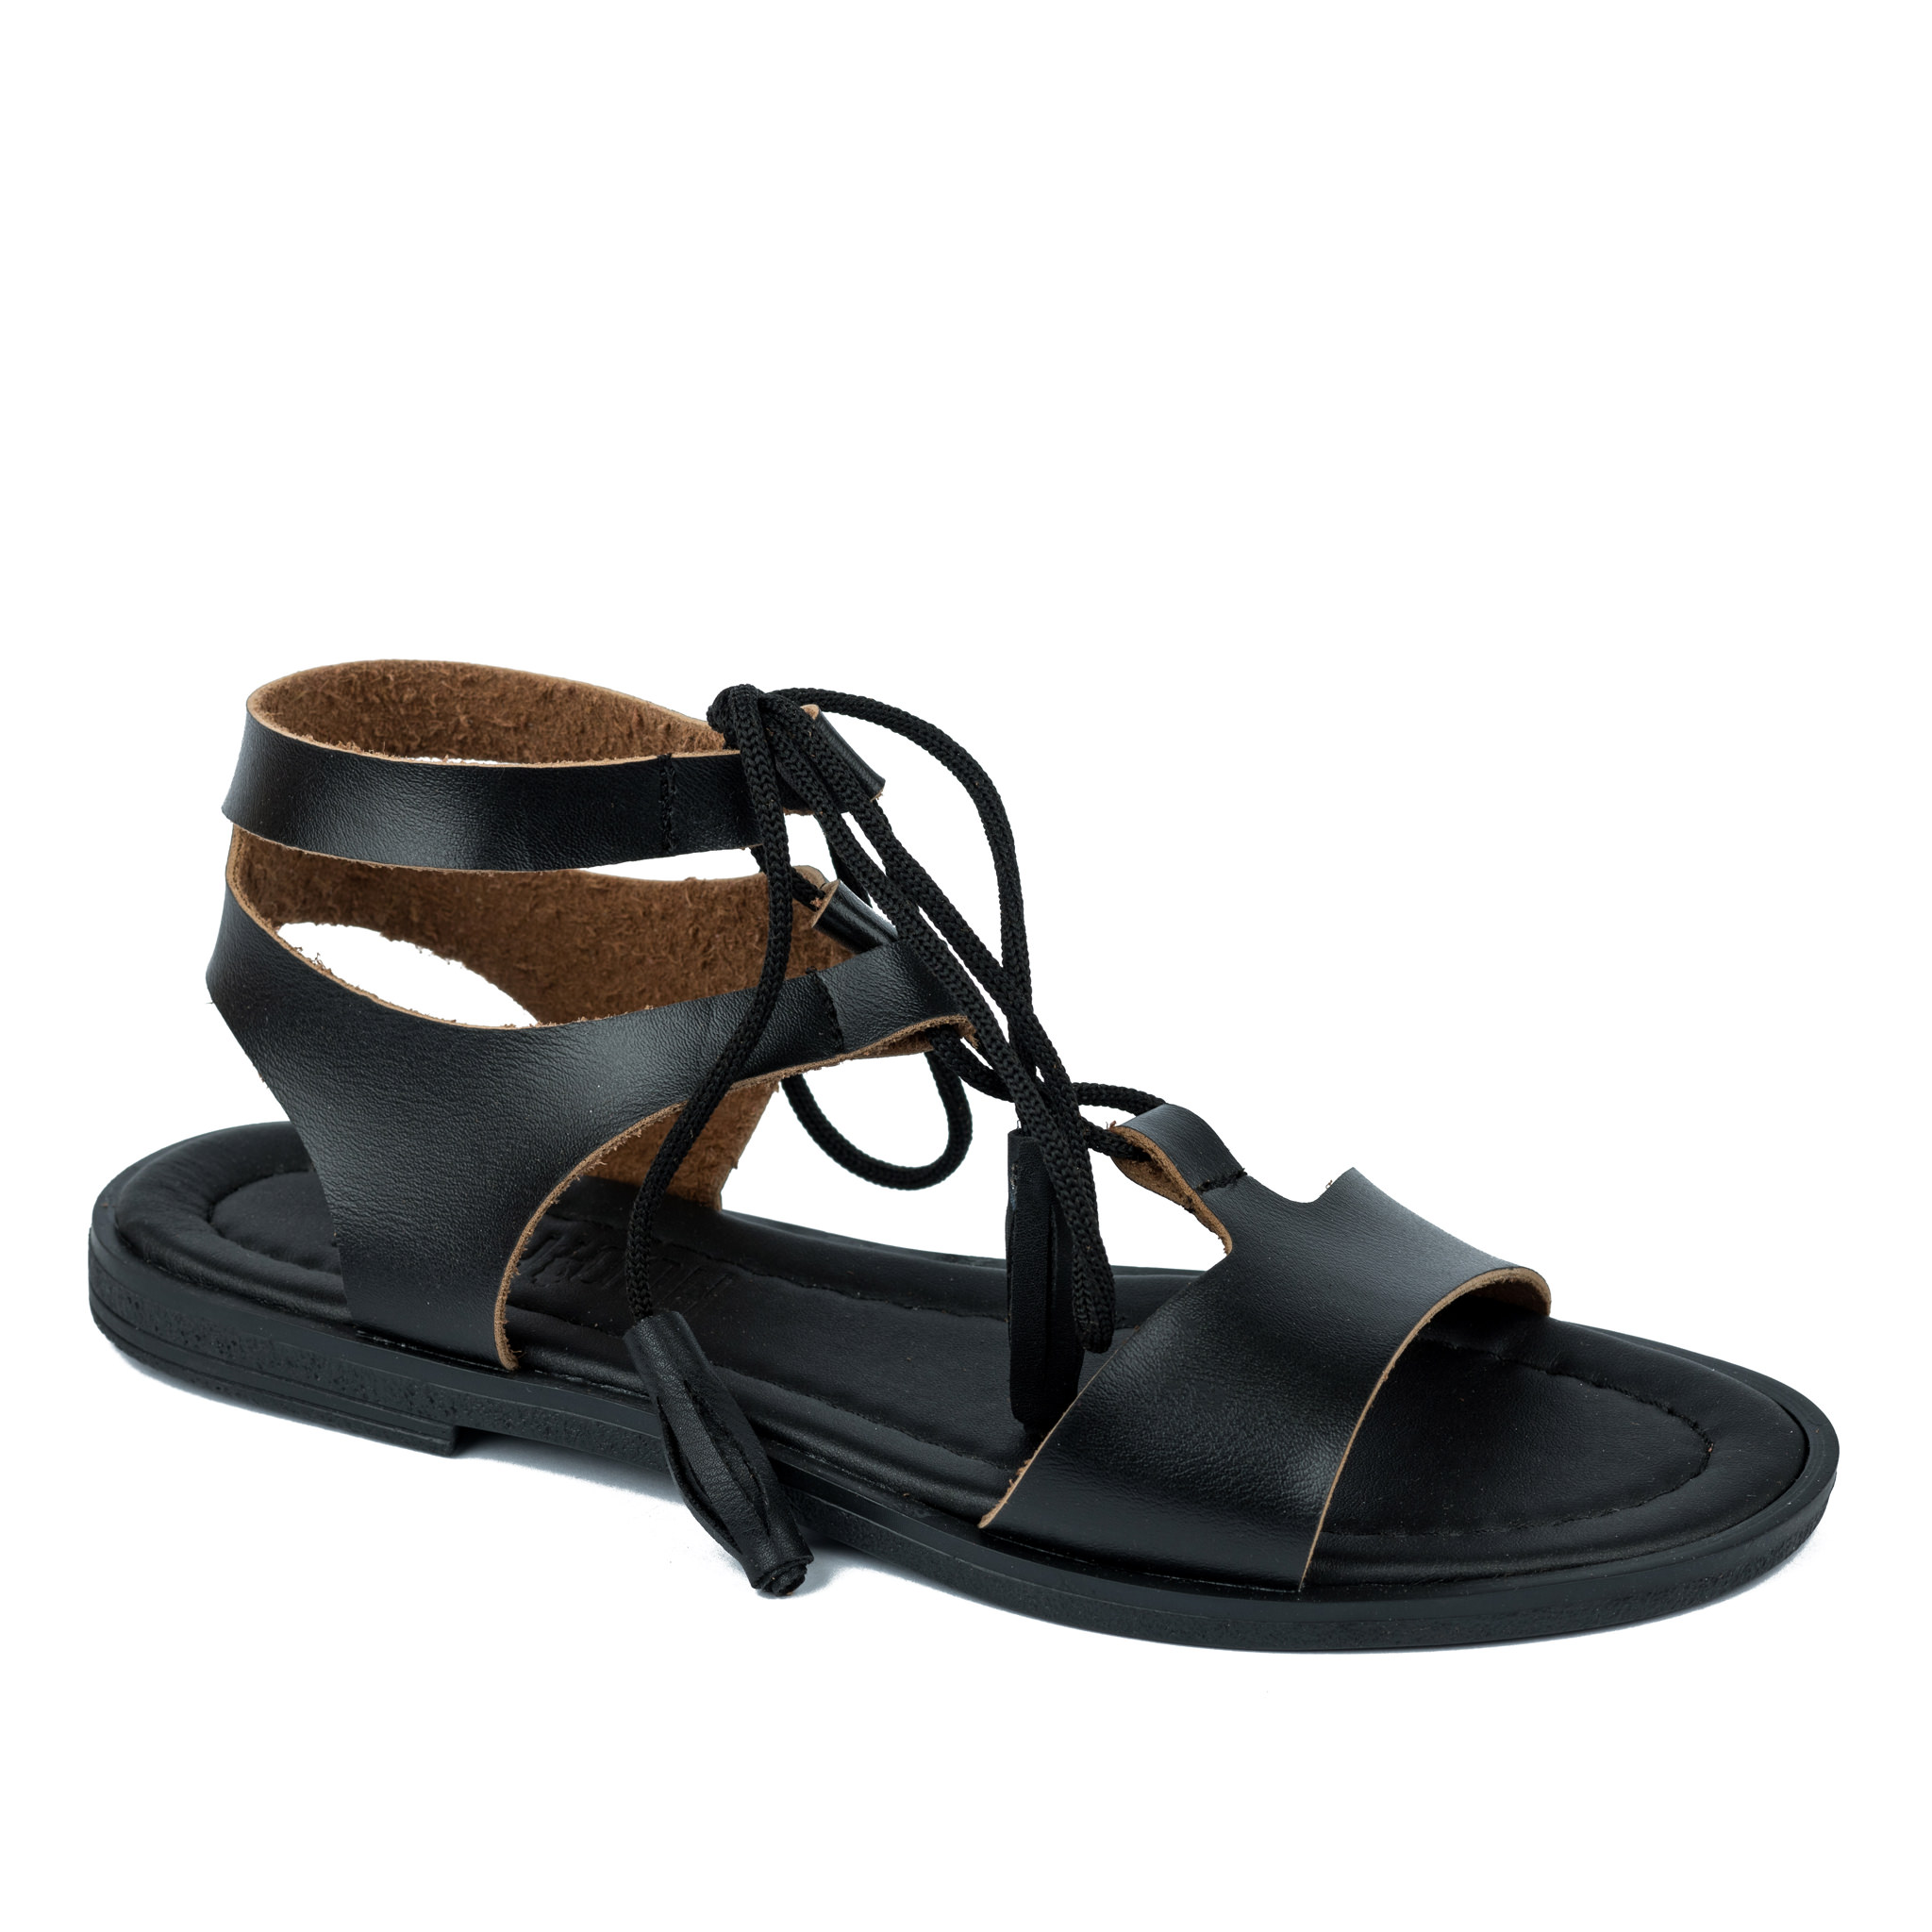 Women sandals A270 - BLACK